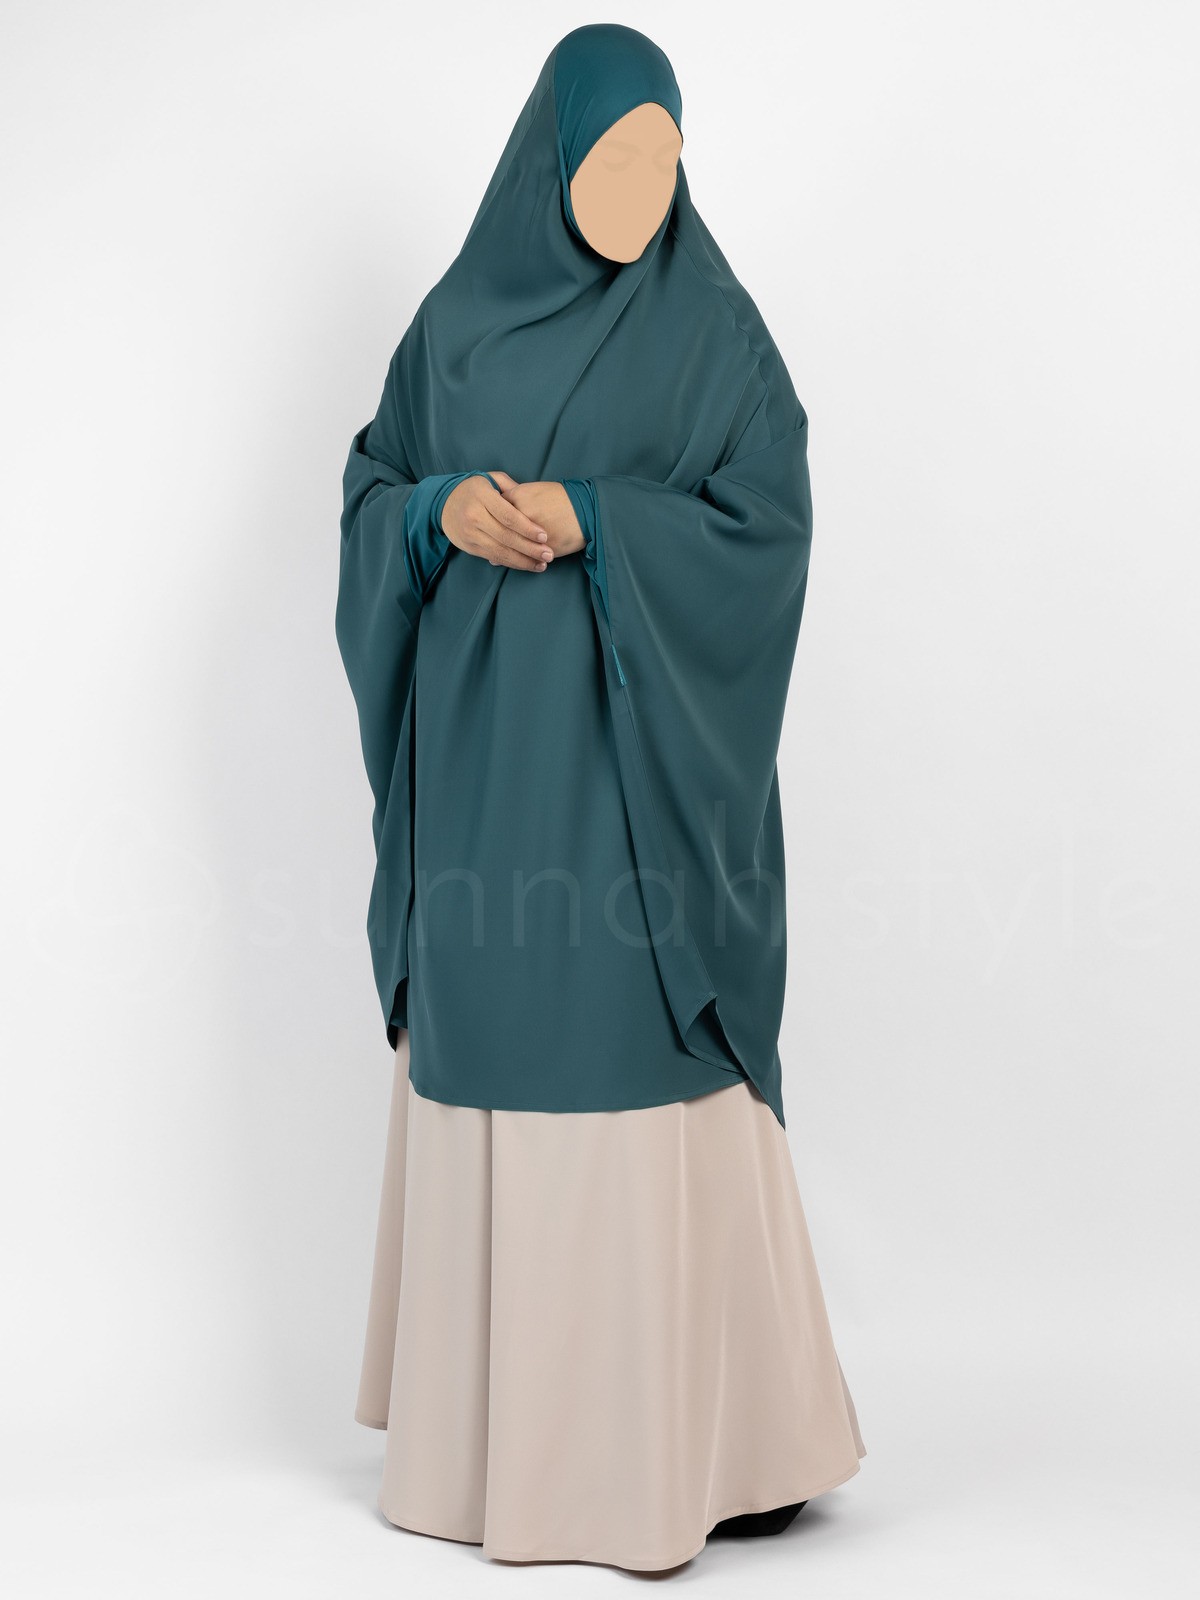 Sunnah Style - Signature Jilbab Top - Knee Length (Teal)